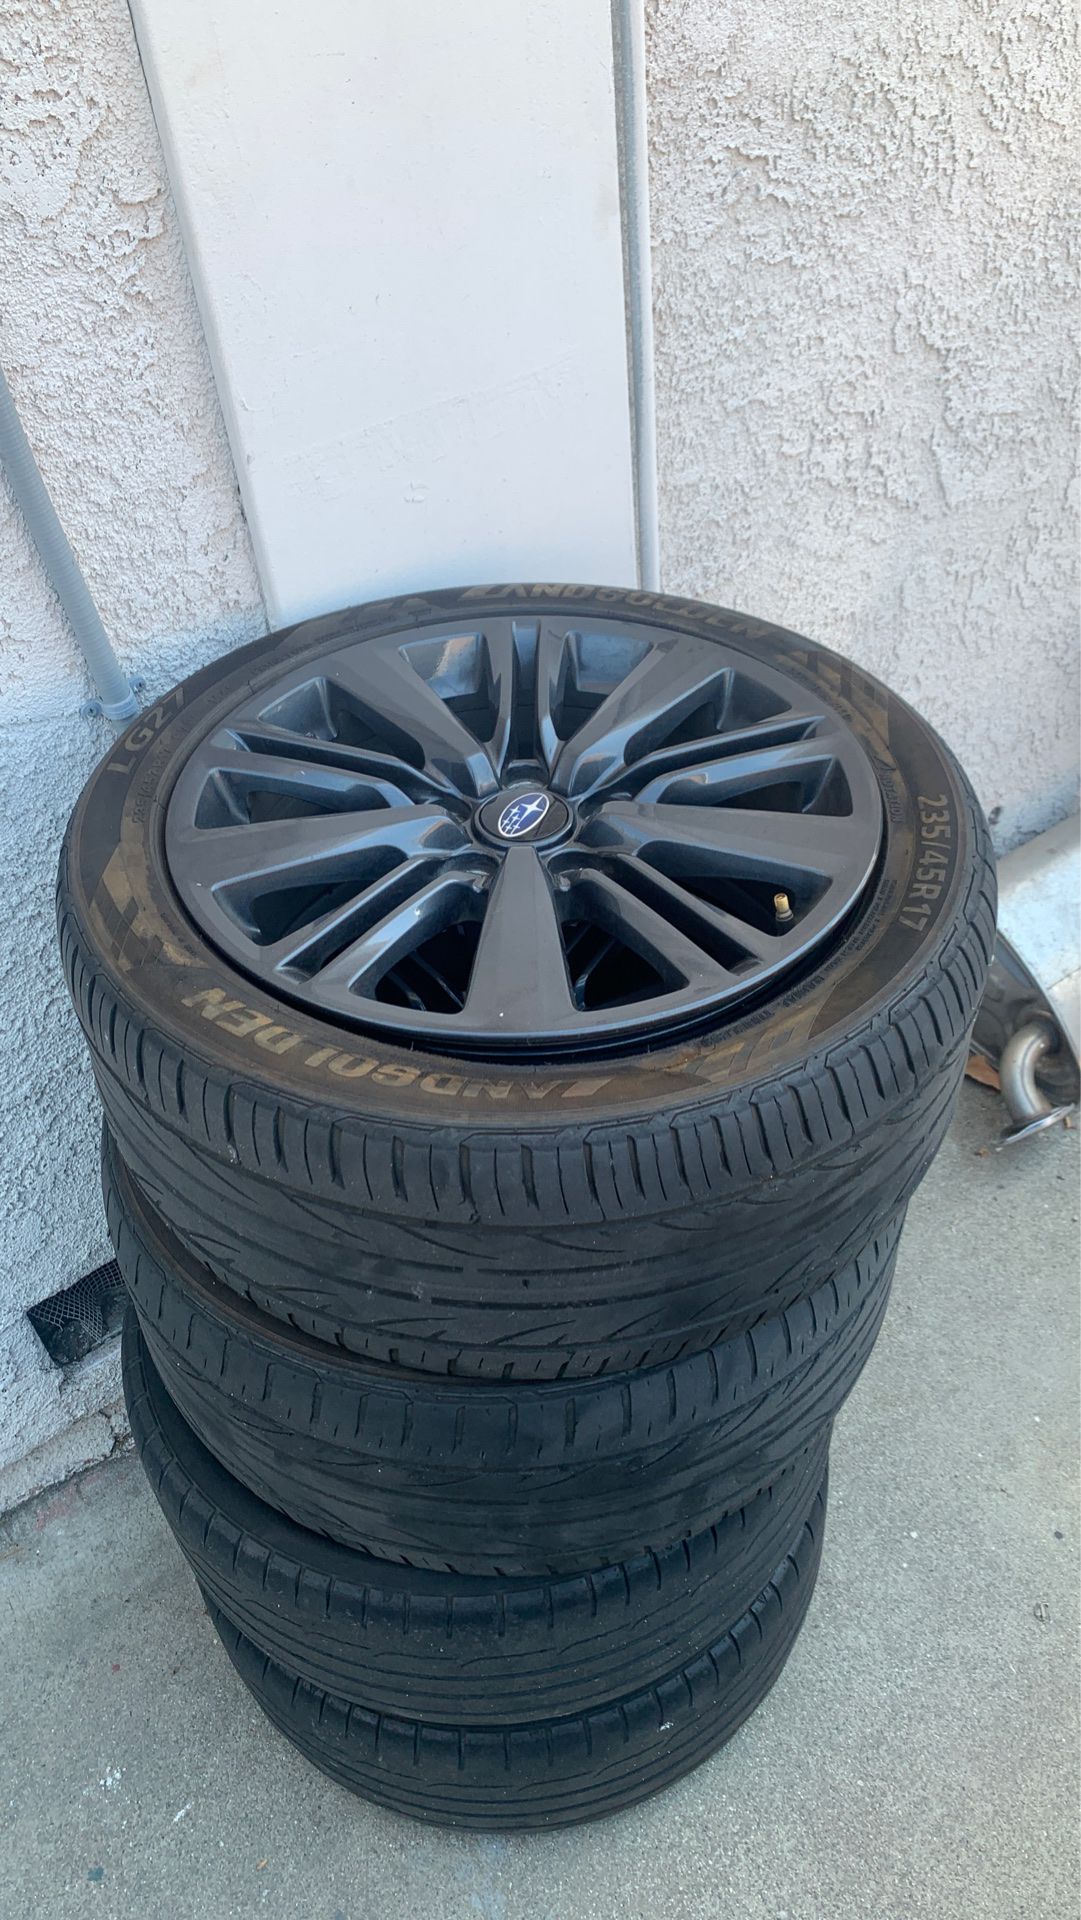 Subaru stock wheels with tires 2018 wrx